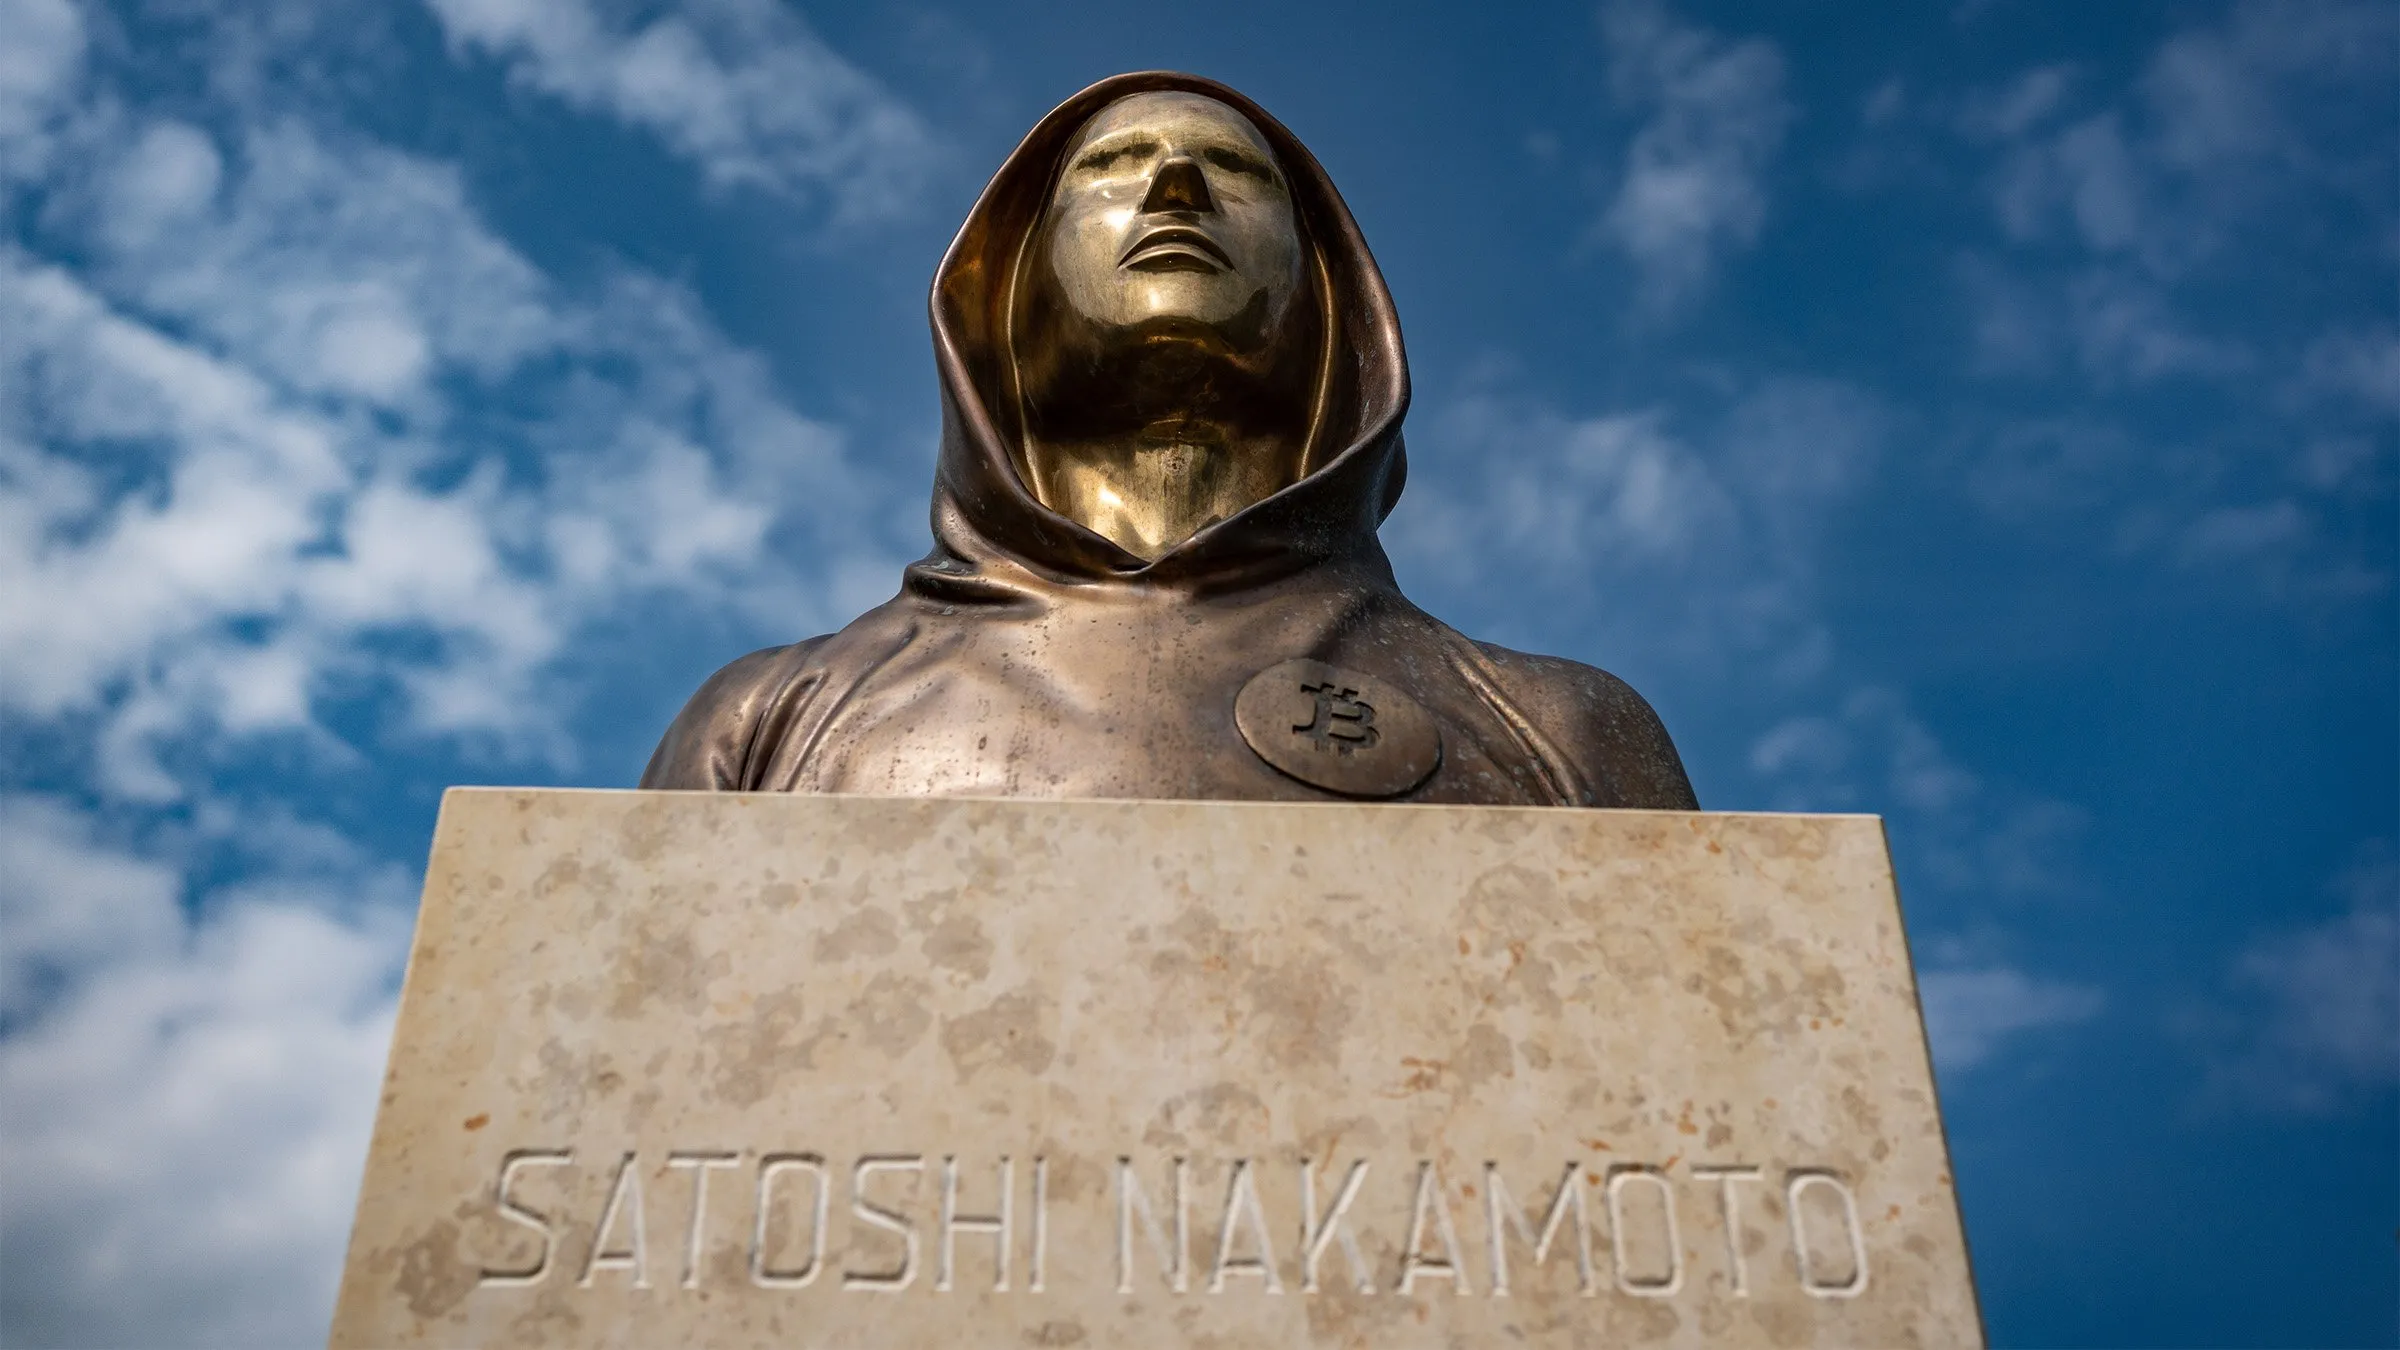 Satoshi Nakamoto Statue